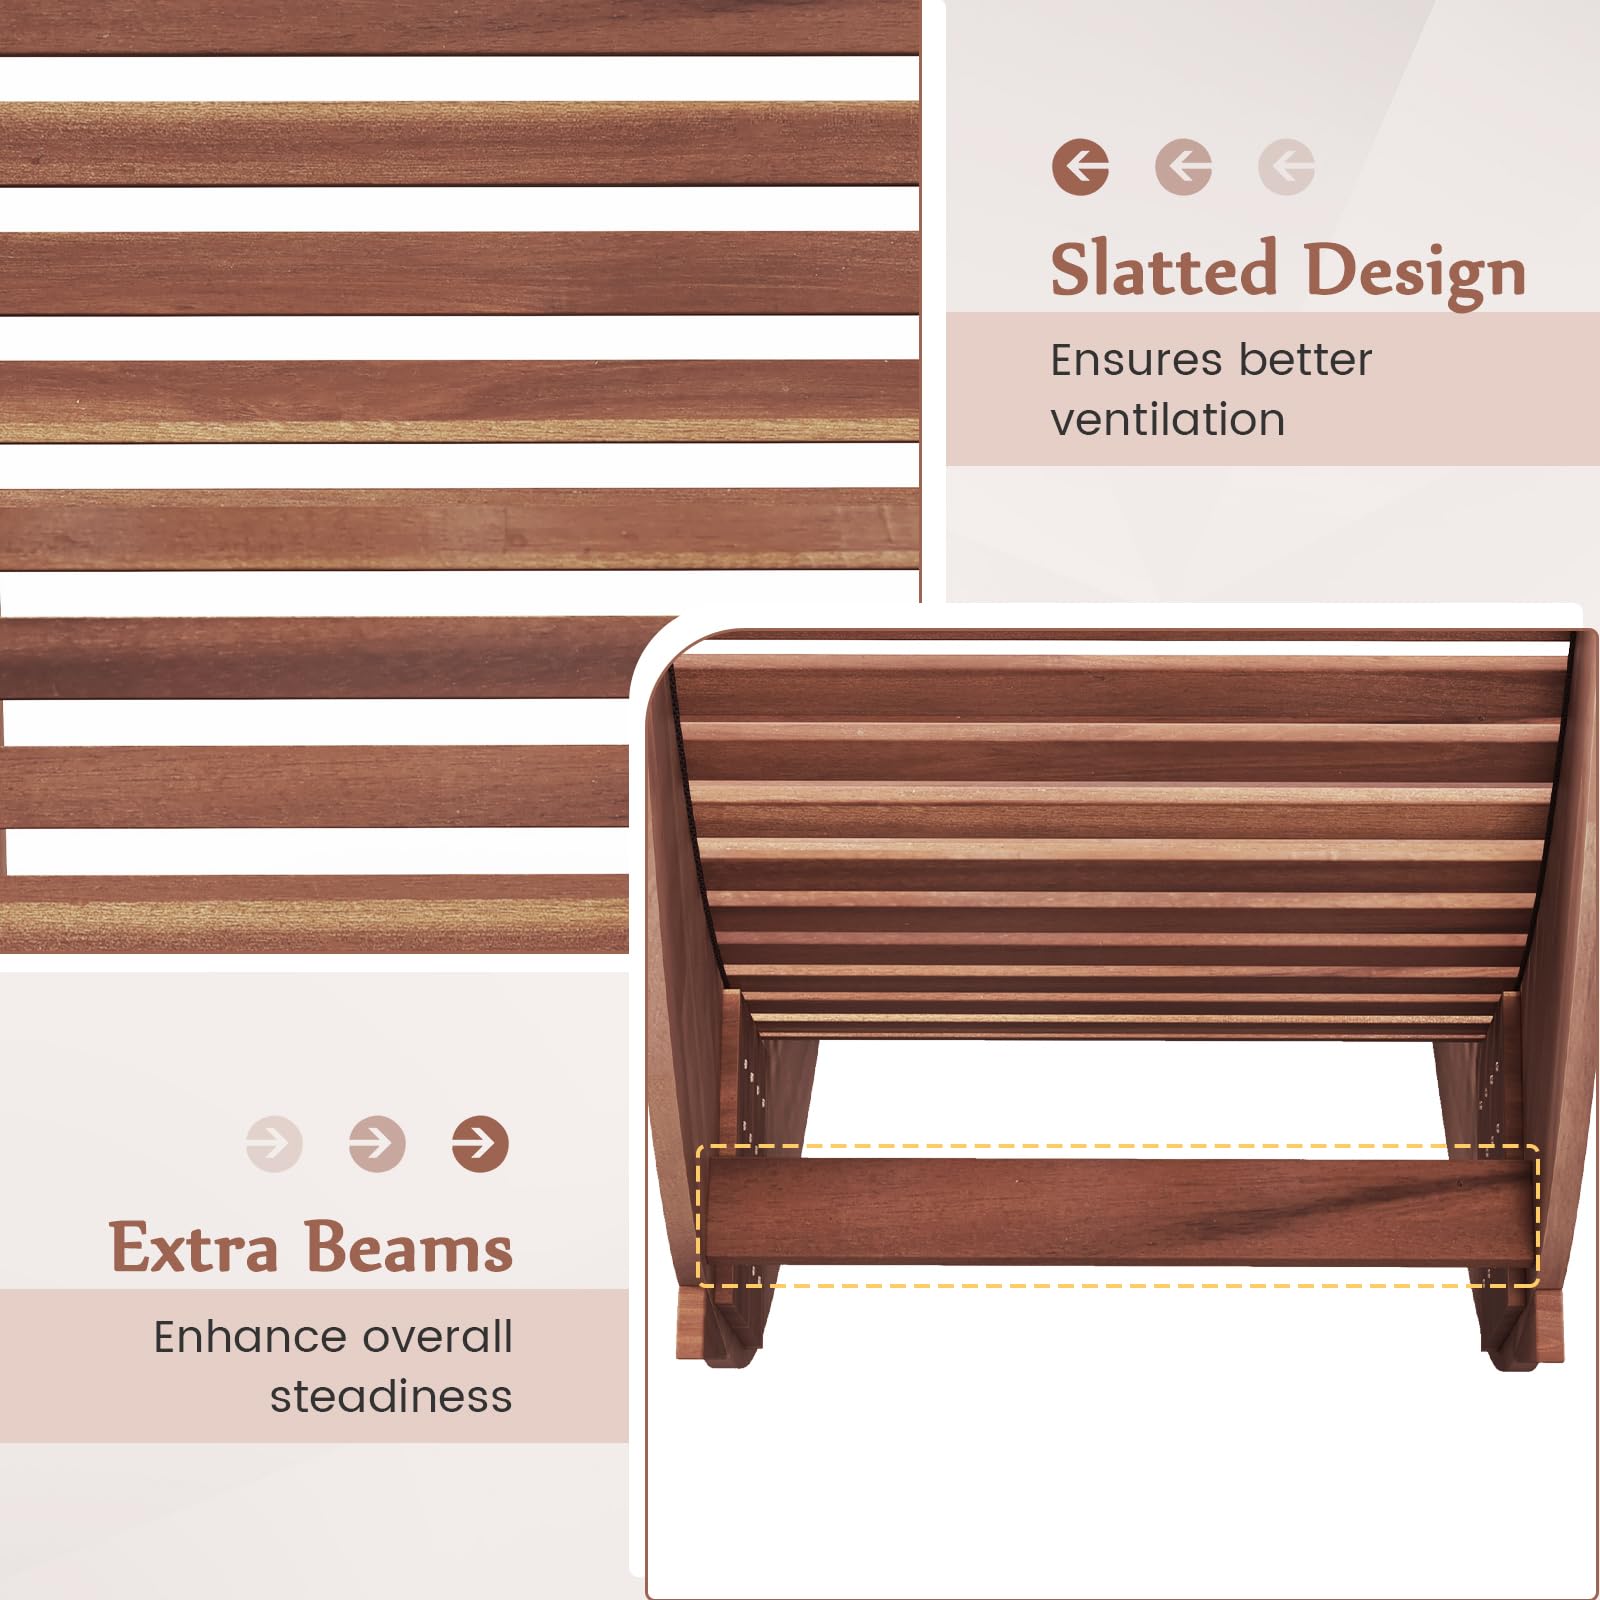 Giantex Outdoor Chaise Lounge Chair - Acacia Wood Outdoor Lounger, Patio Lounge Chair with Slatted Design